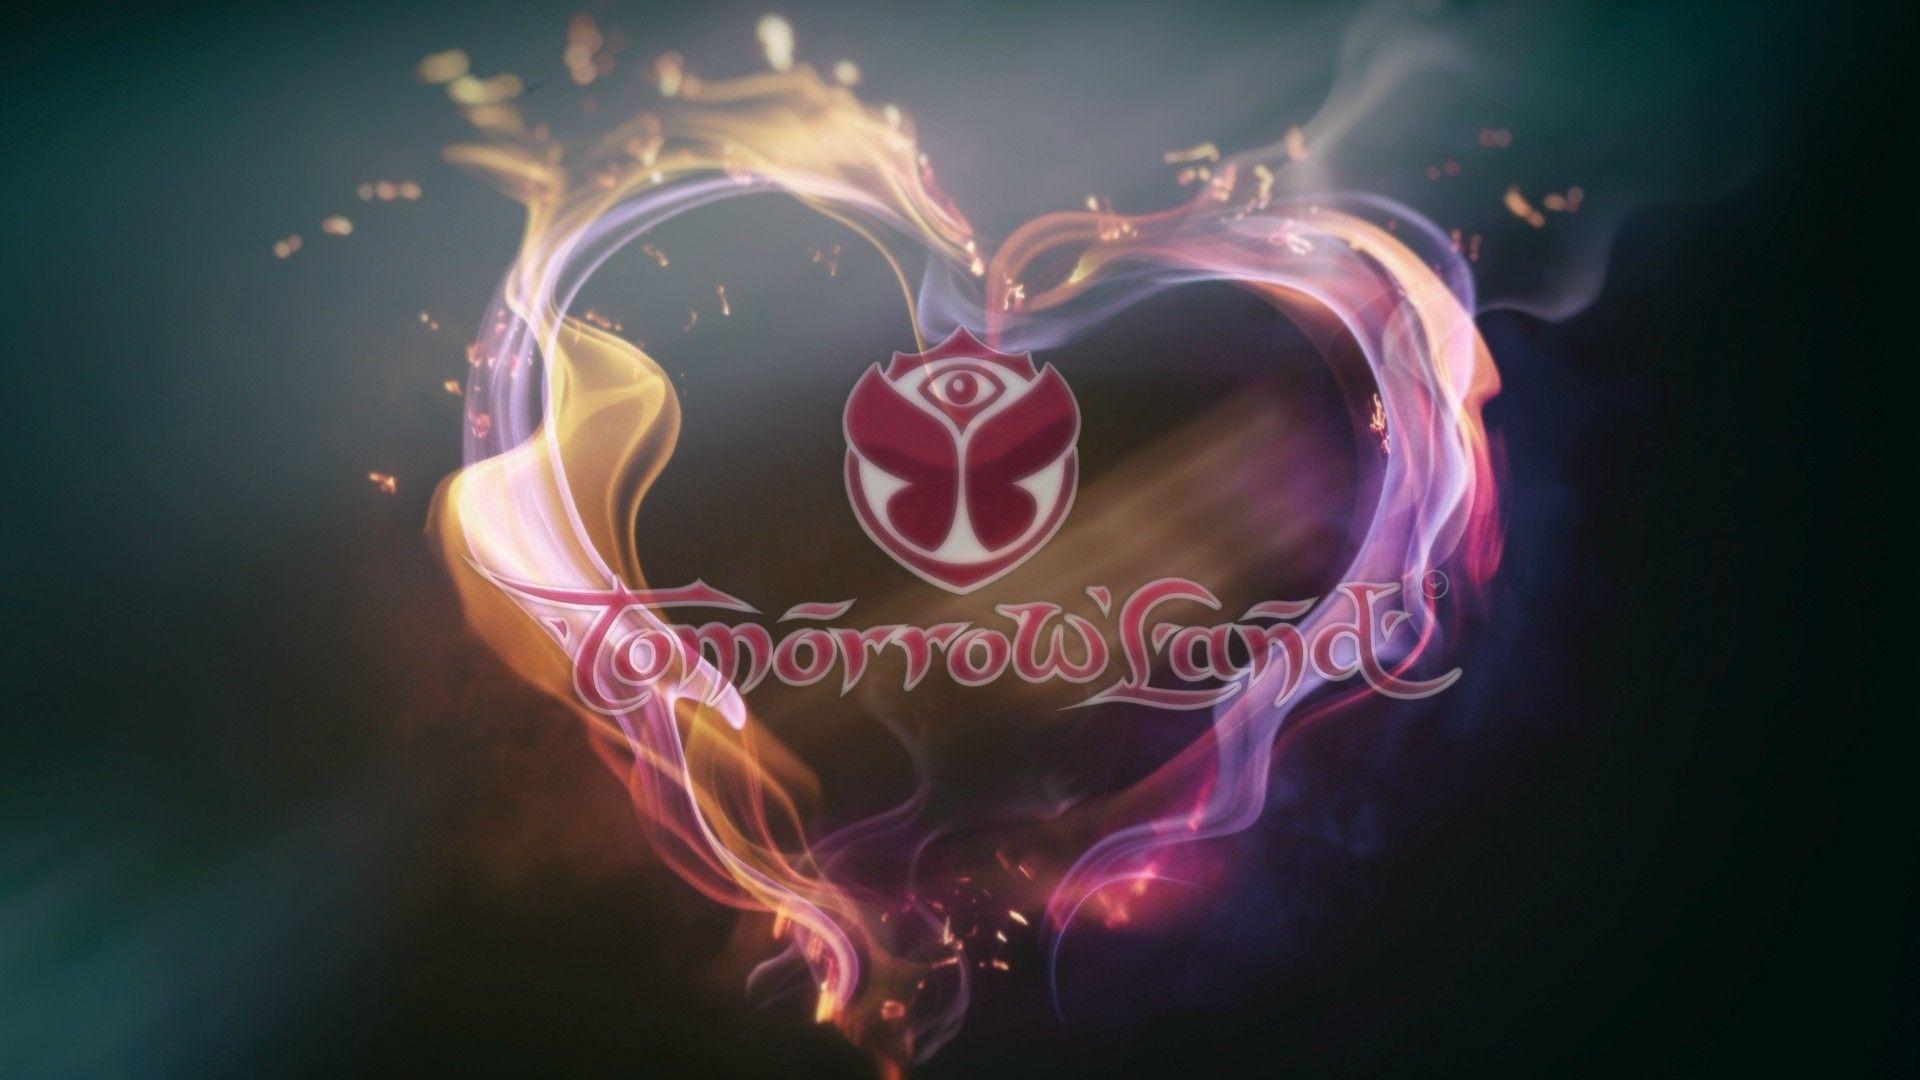 Tomorrowland Logo Wallpaper